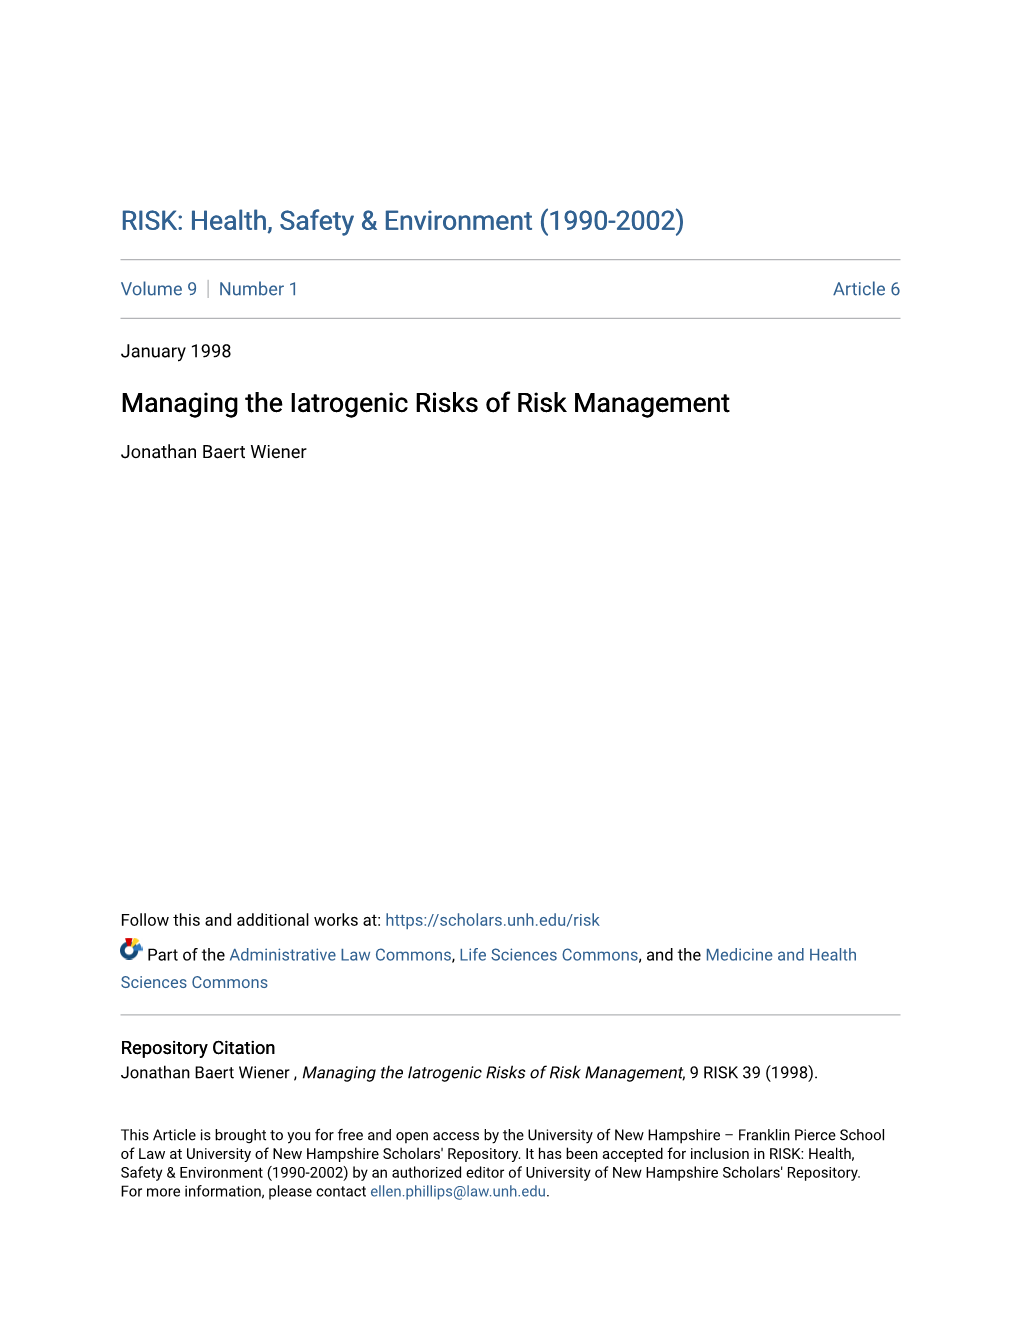 Managing the Iatrogenic Risks of Risk Management